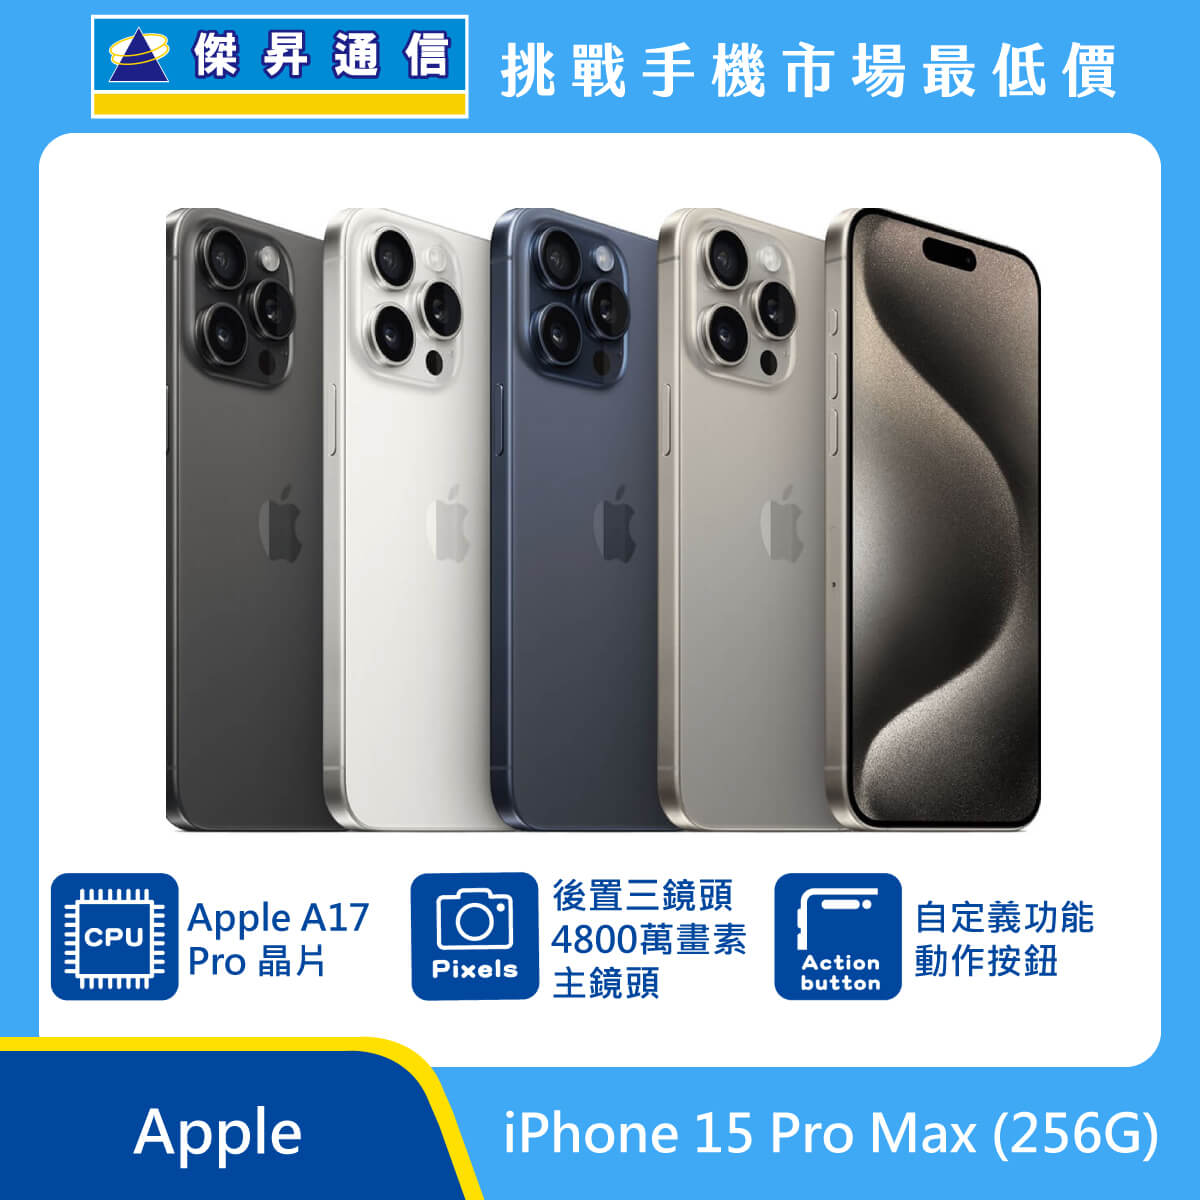 Apple iPhone 15 Pro Max (256G) [黑]